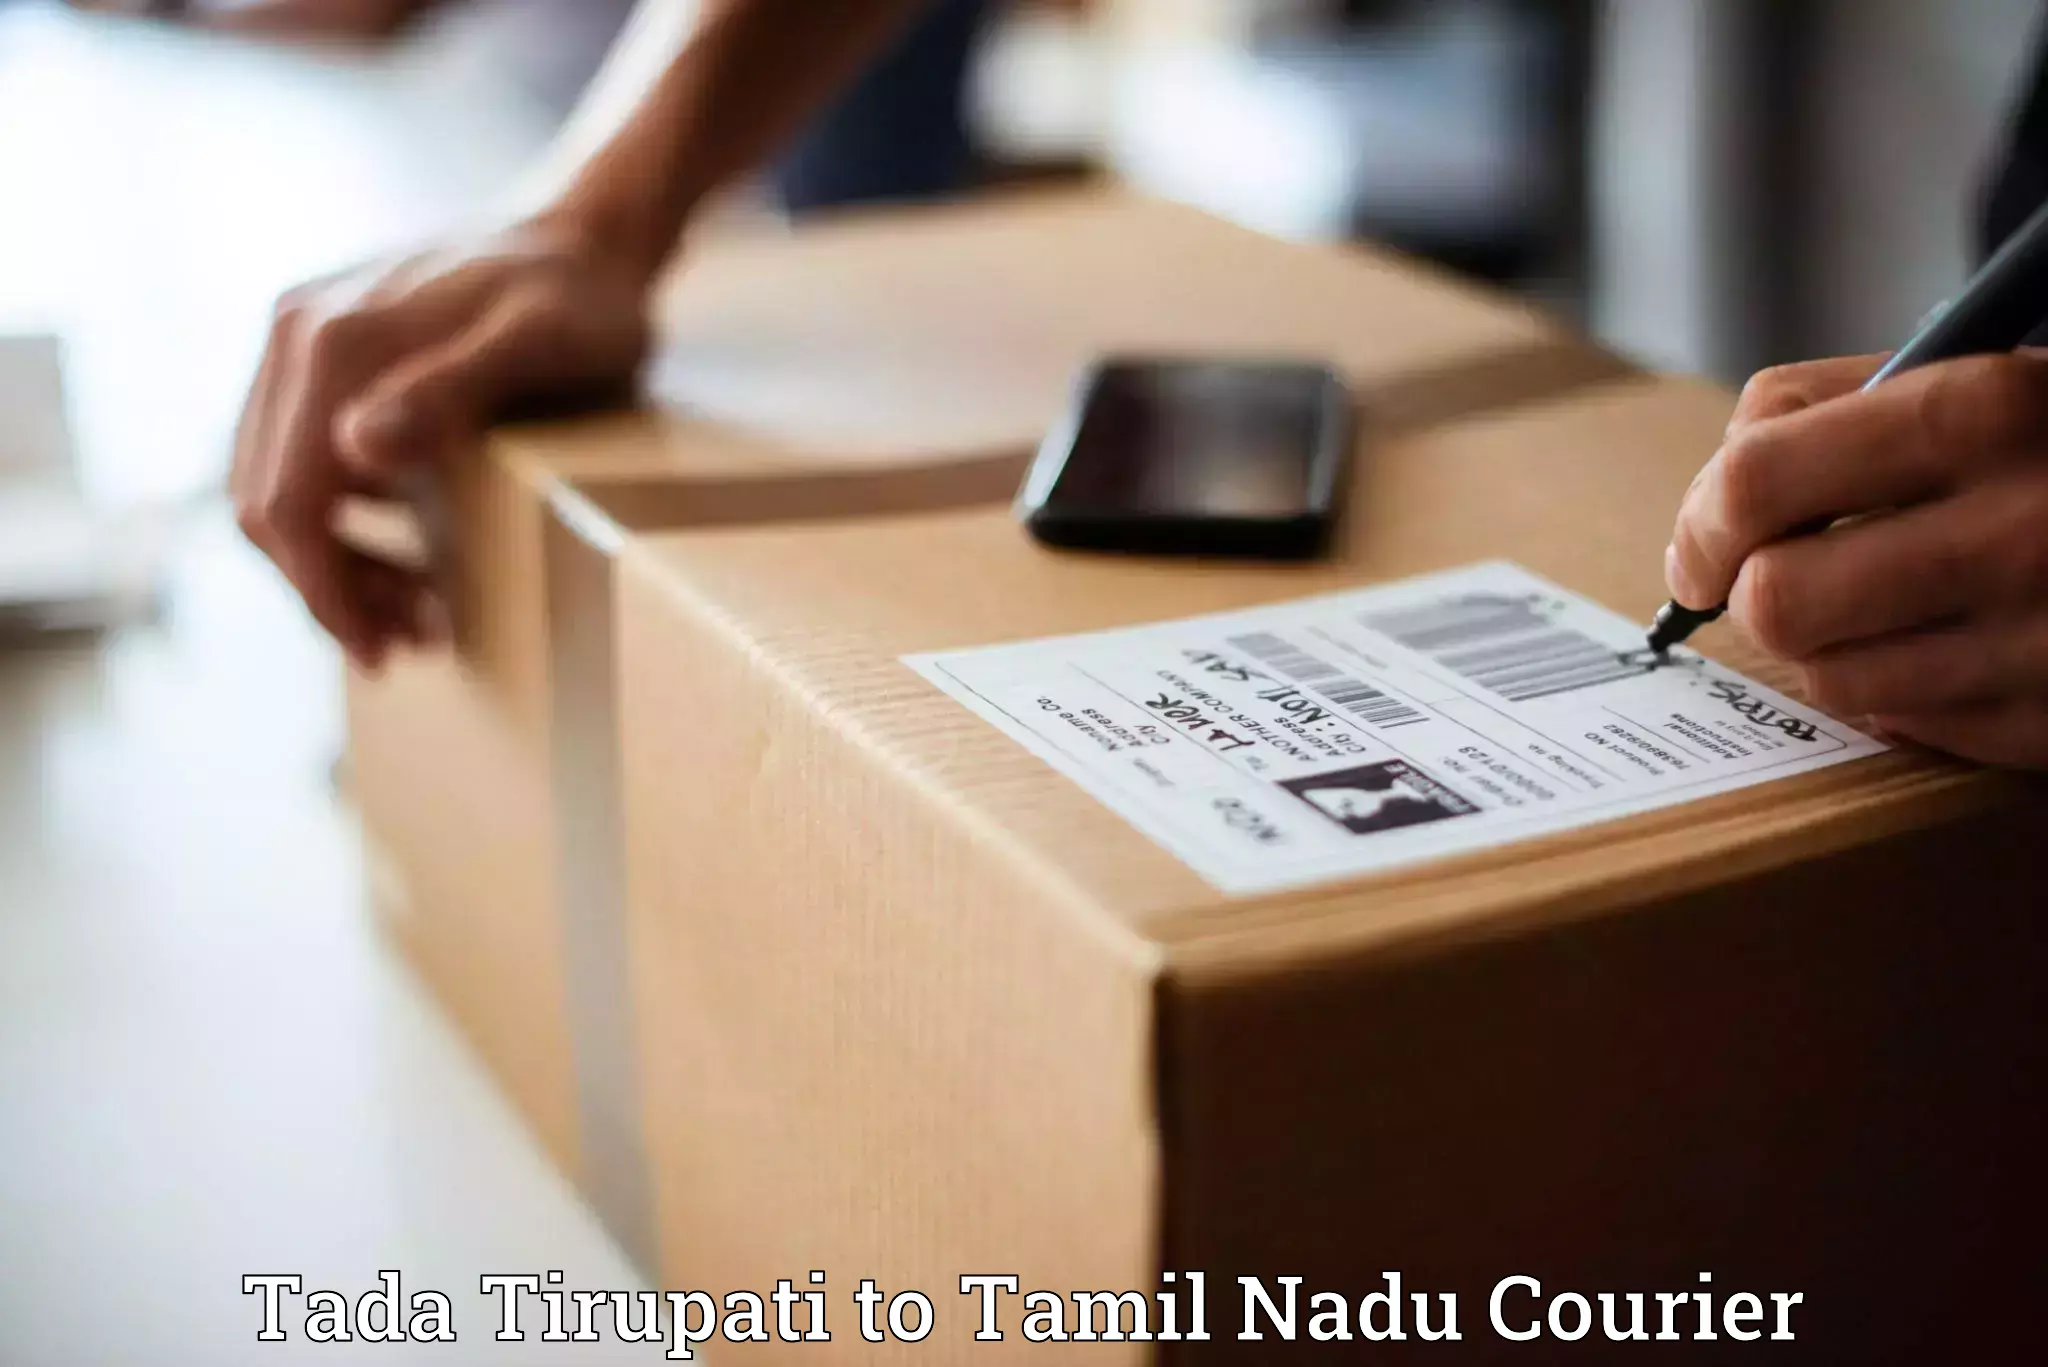 Cash on delivery service Tada Tirupati to Kodaikanal